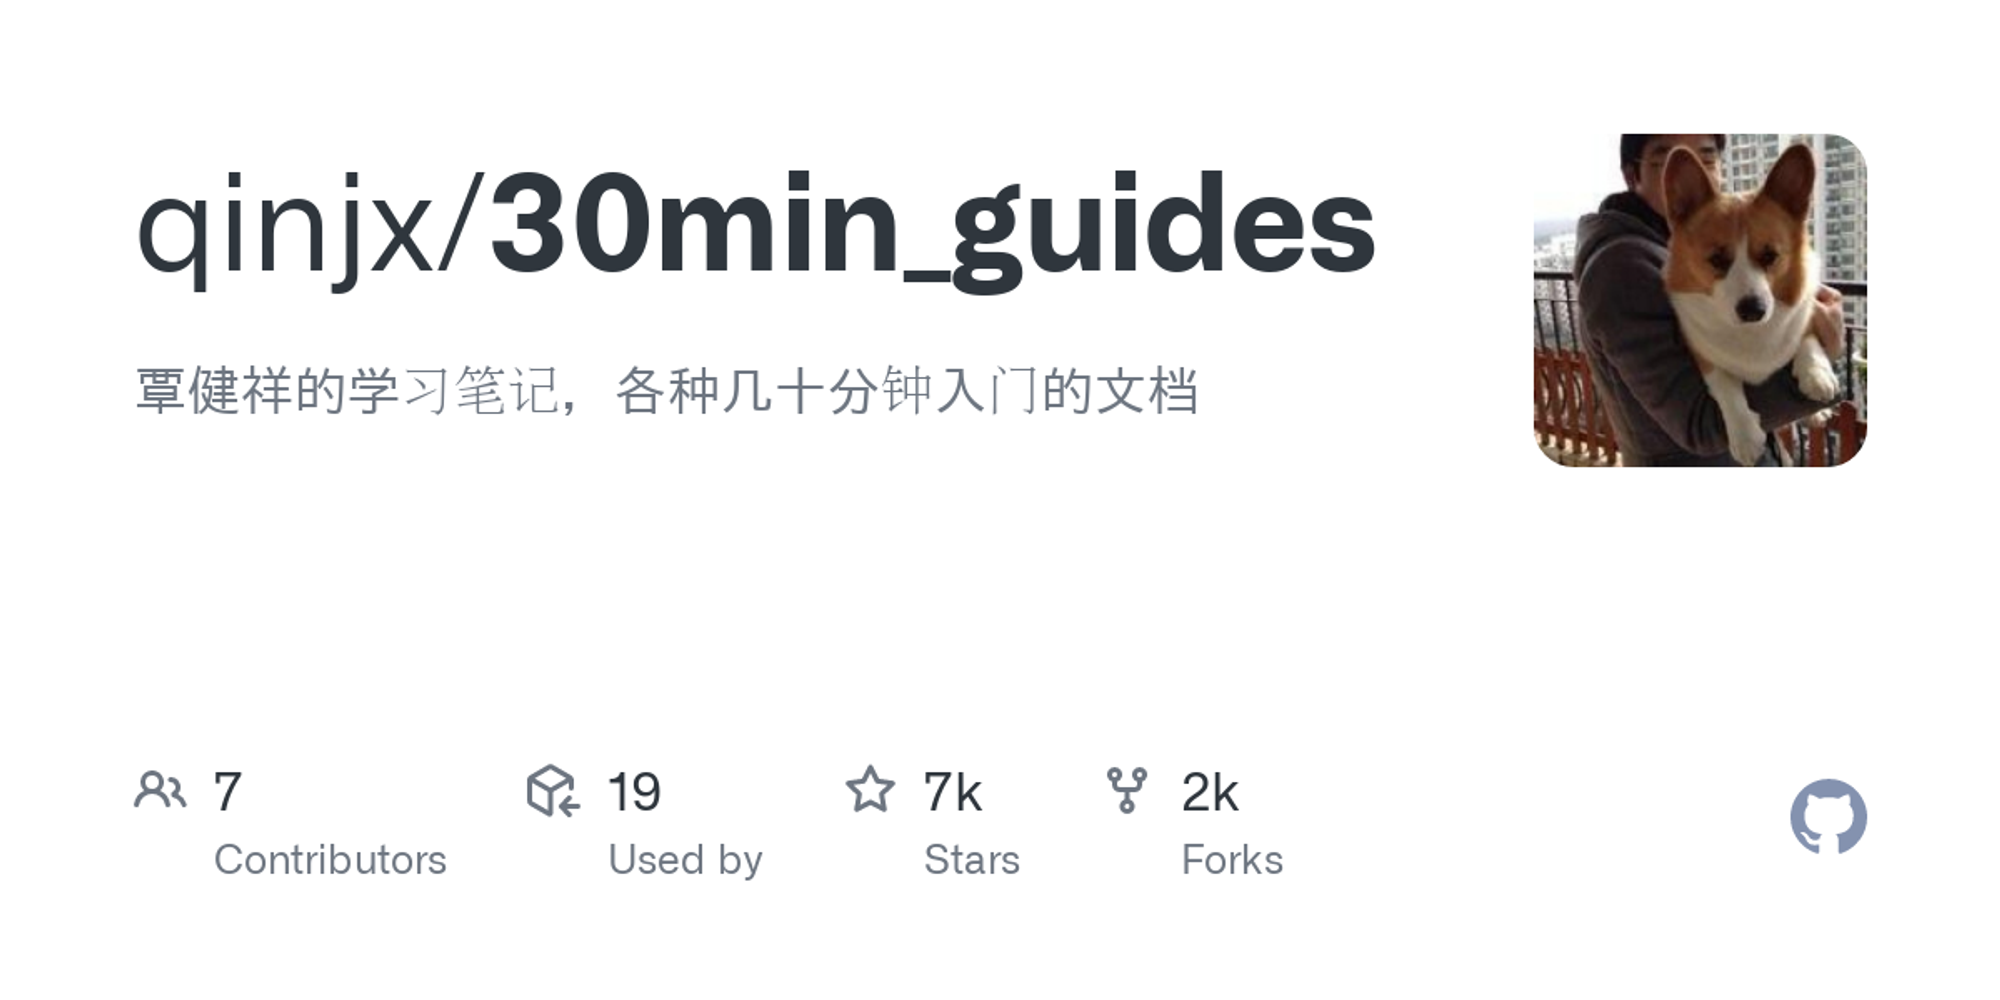 30min_guides/shell.md at master · qinjx/30min_guides